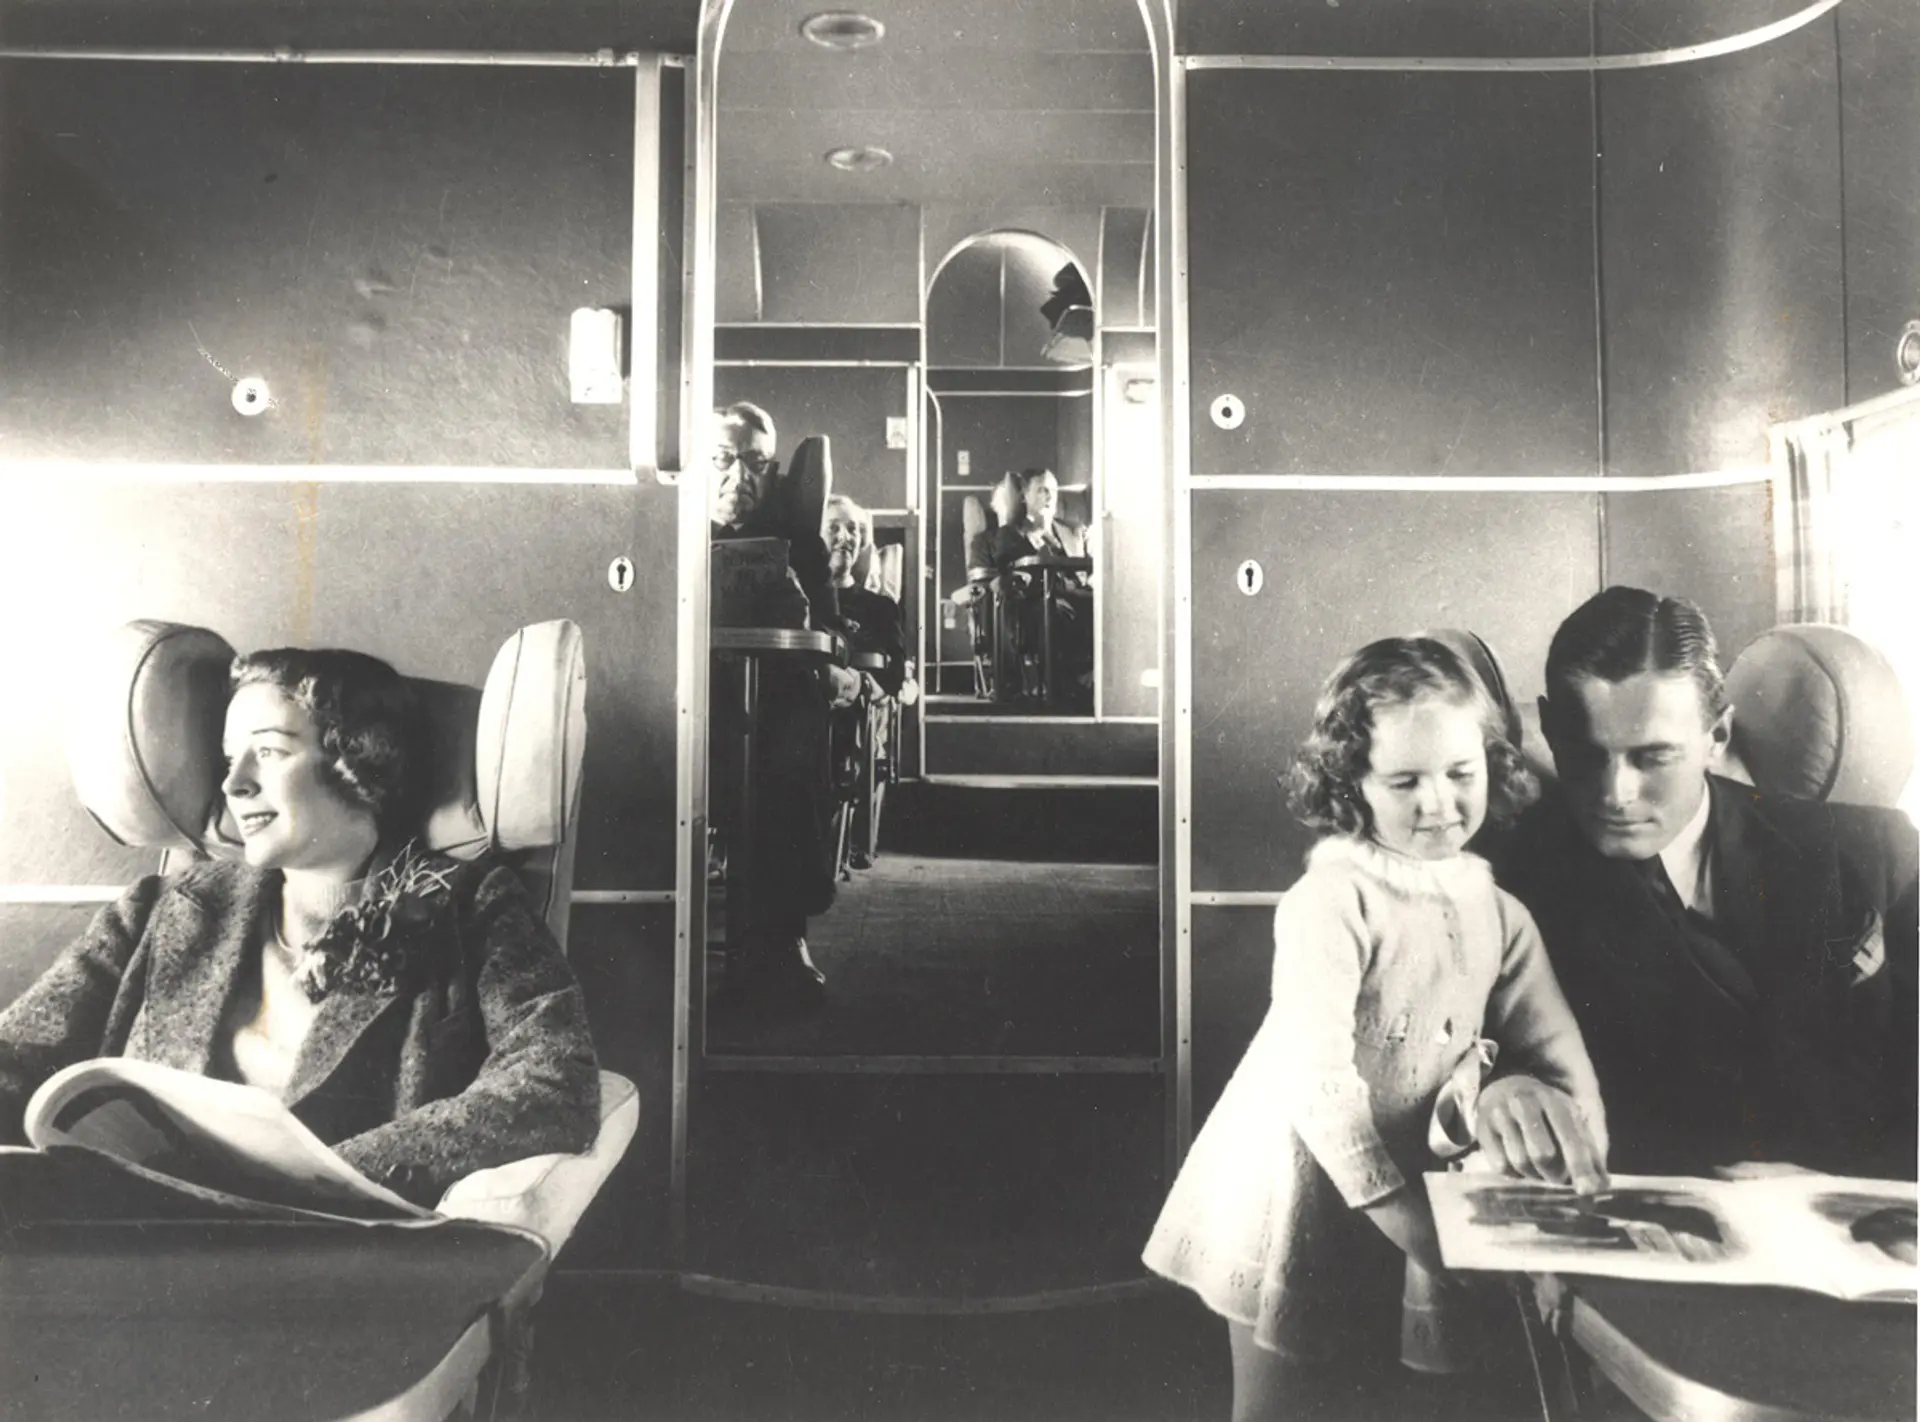 Spacious-cabins-on-board-Qantas-flying-boats-1938.jpg